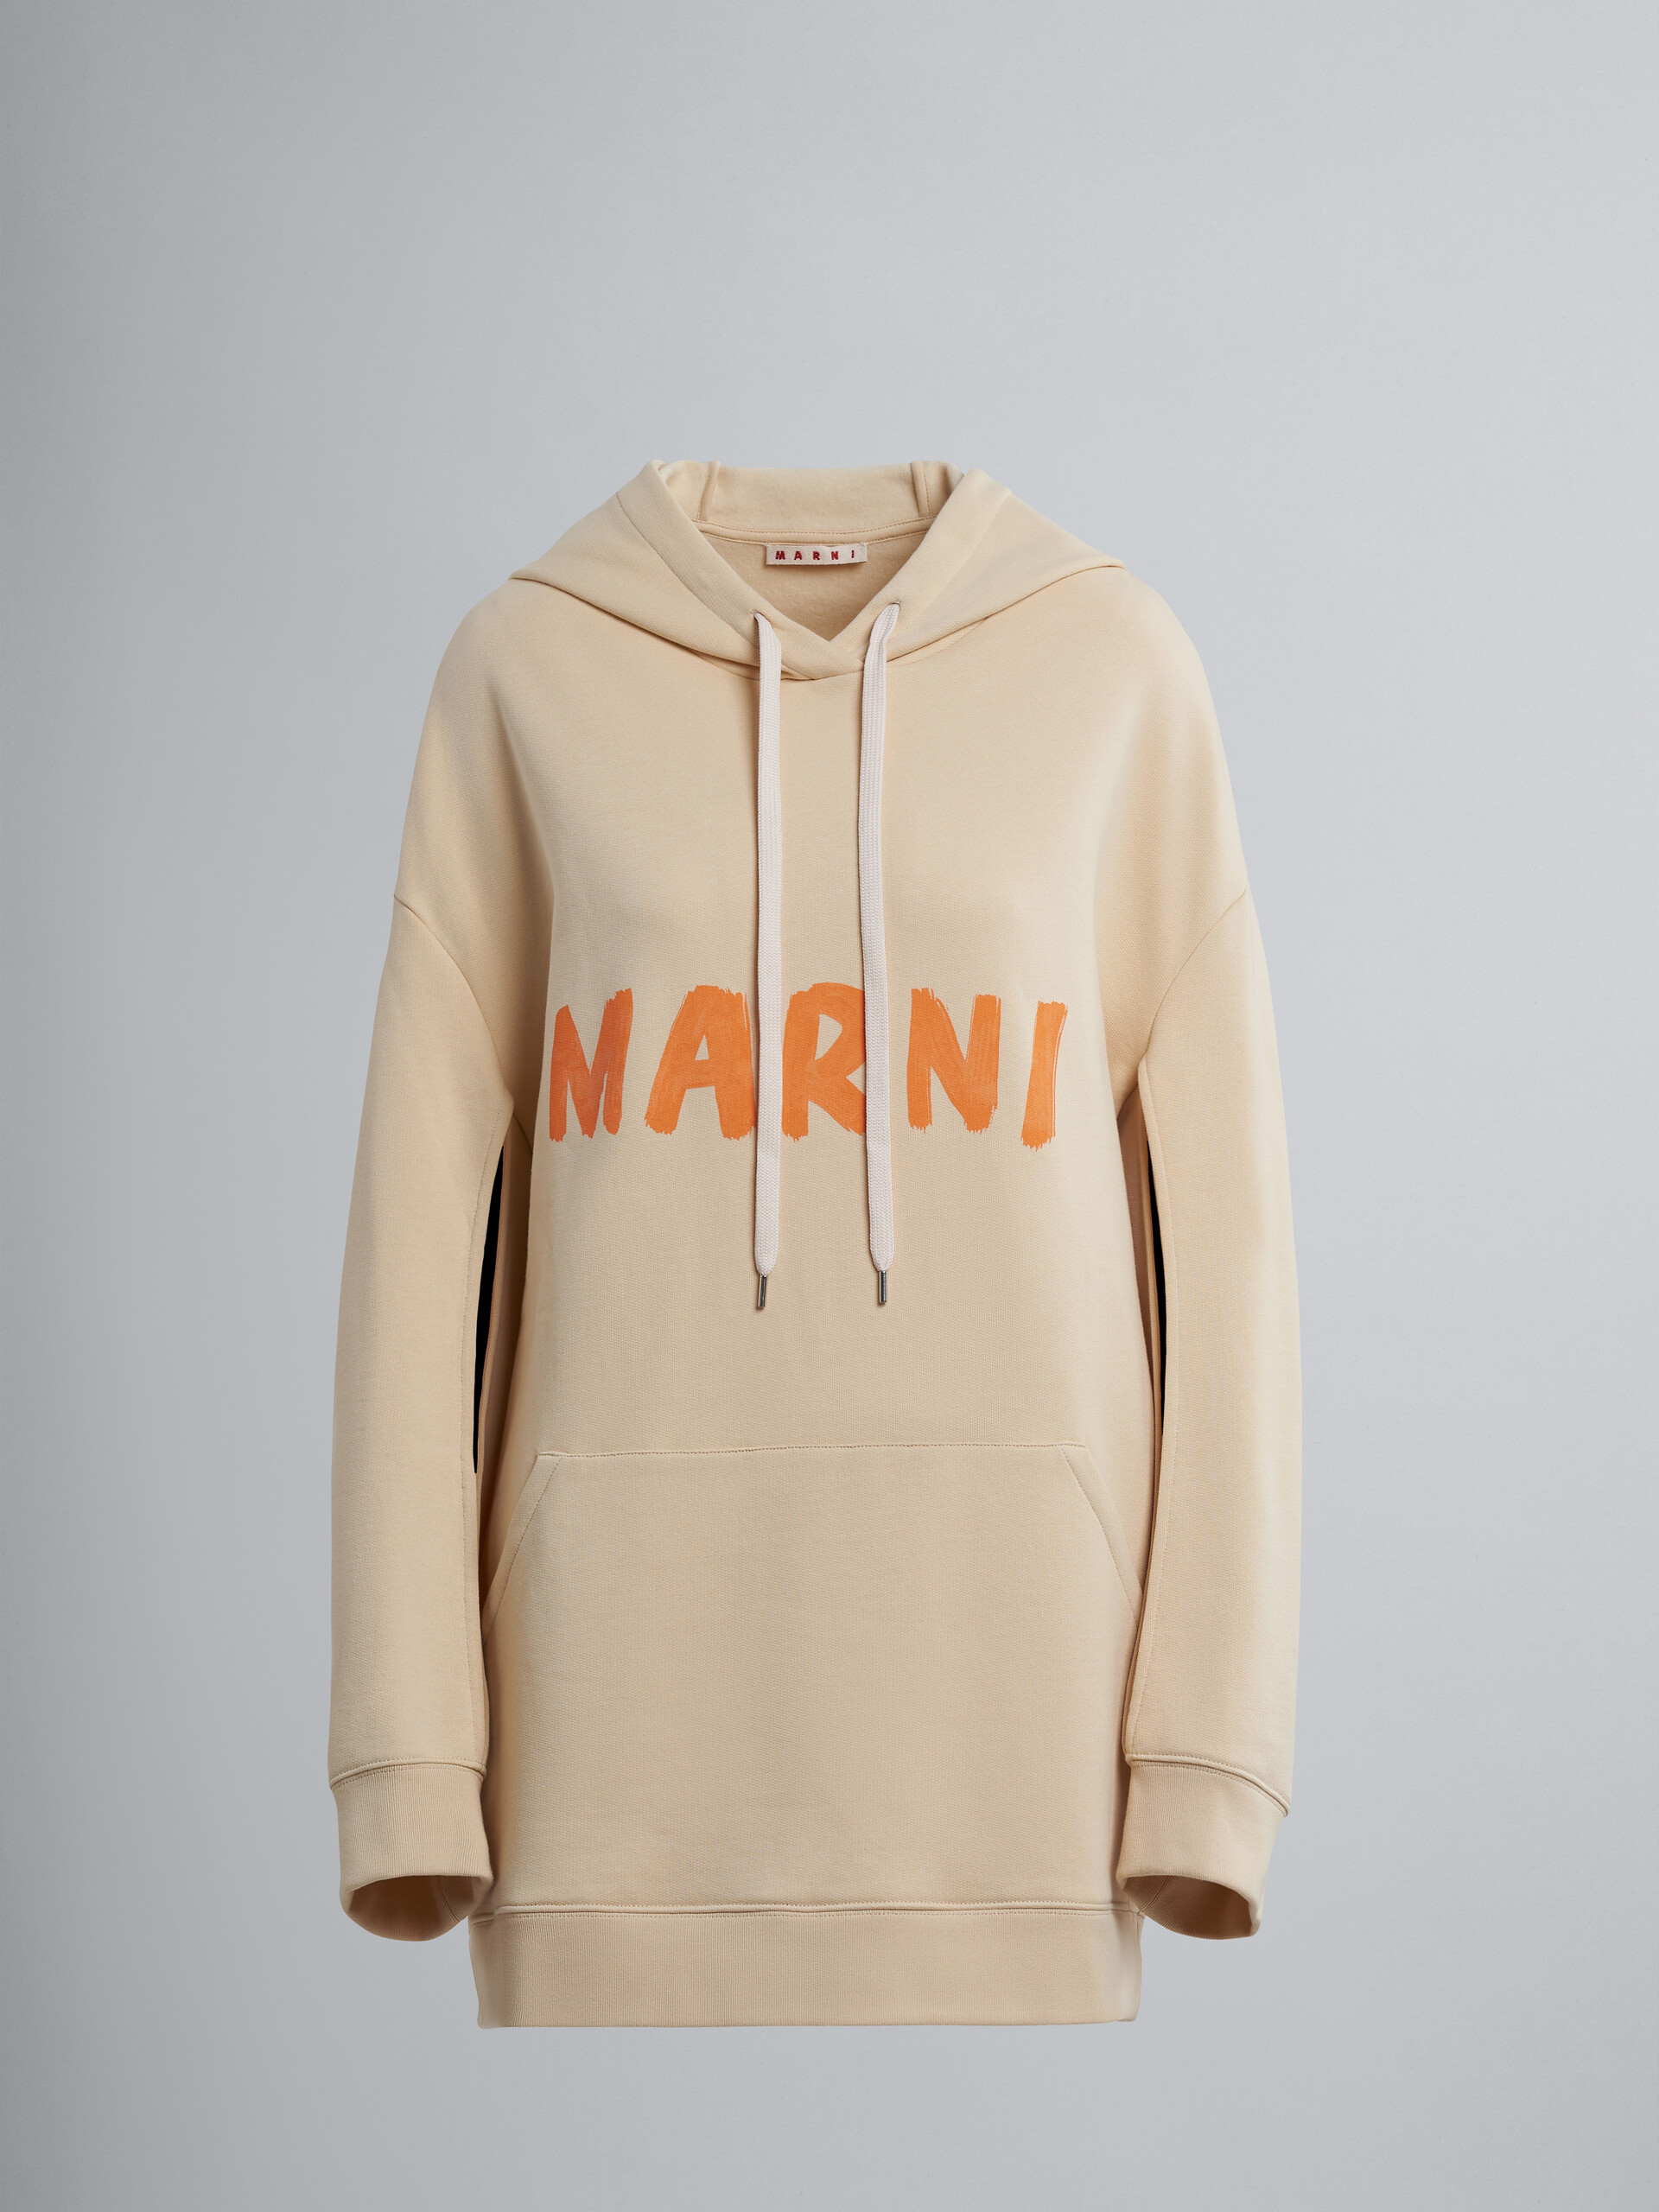 Marni lettering organic cotton sweatshirt - Pullovers - Image 1